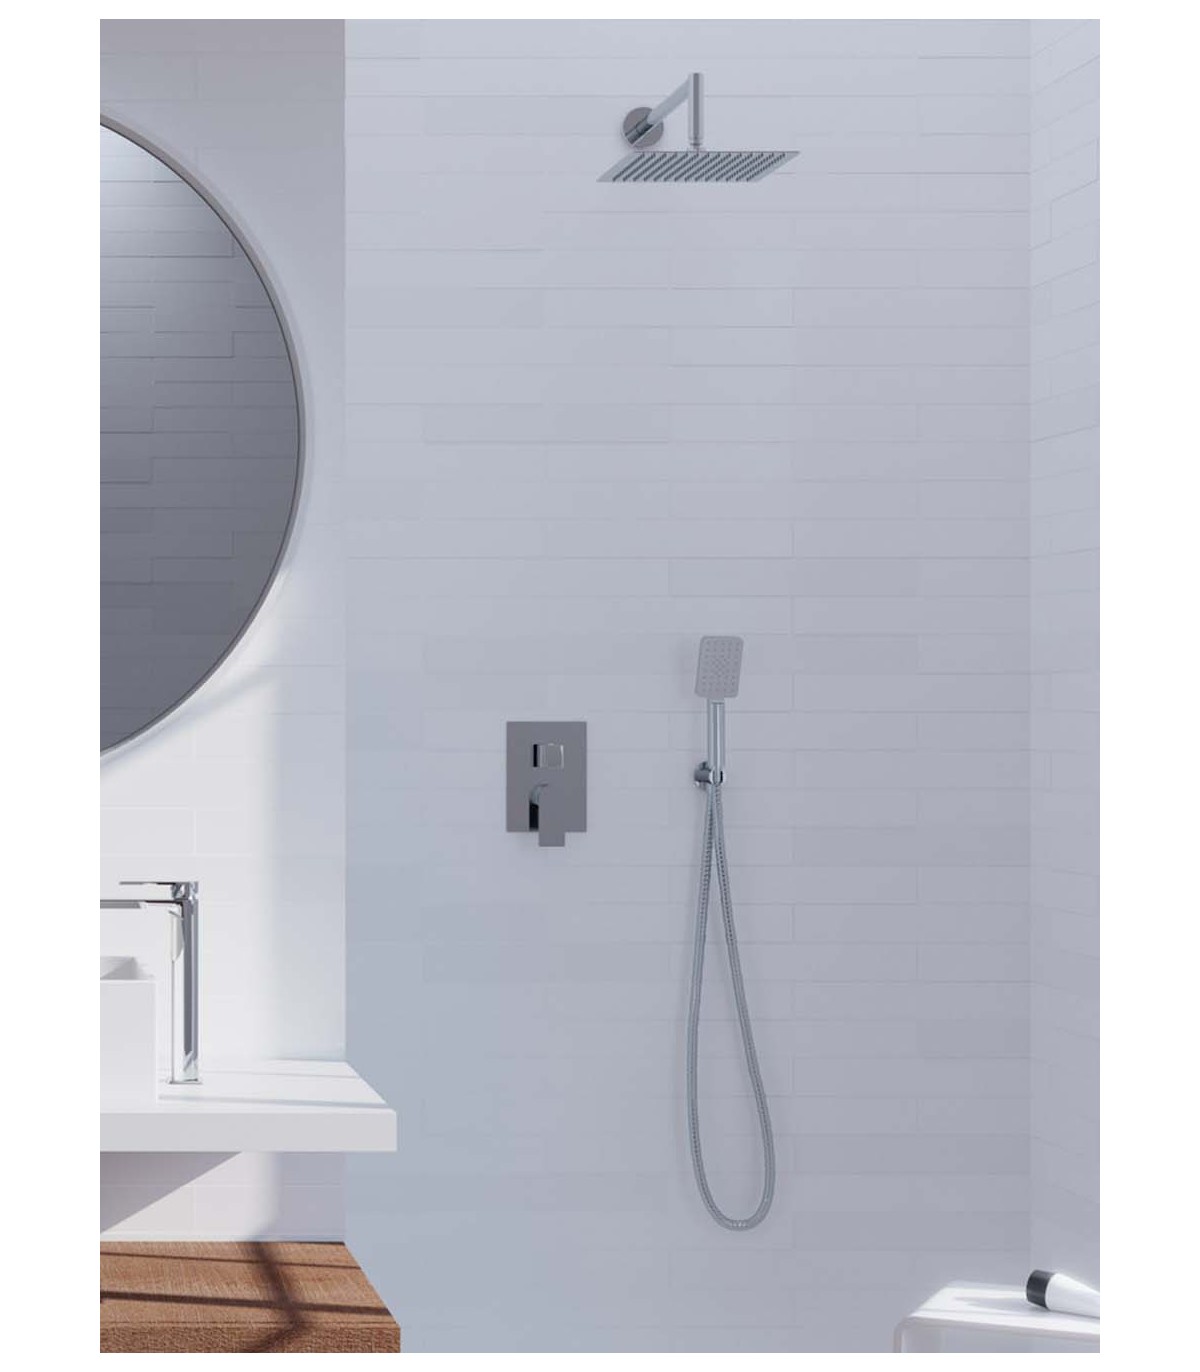 Comprar Kit de ducha termostatica empotrada negro mate cuadrado online